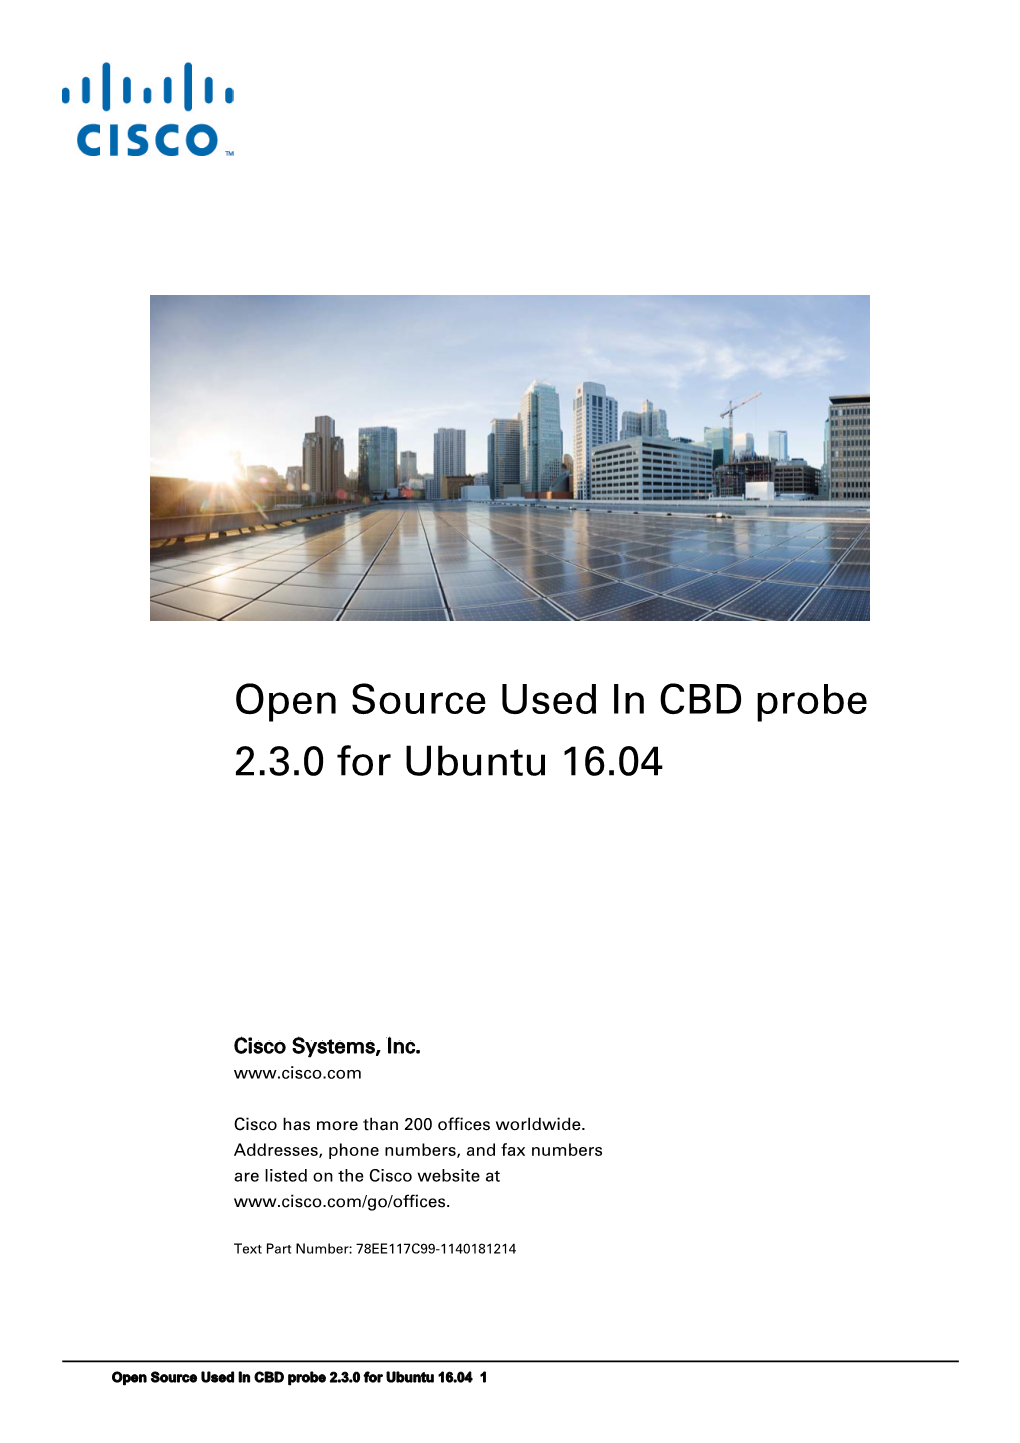 Open Source Used in CBD Probe 2.3.0 for Ubuntu 16.04